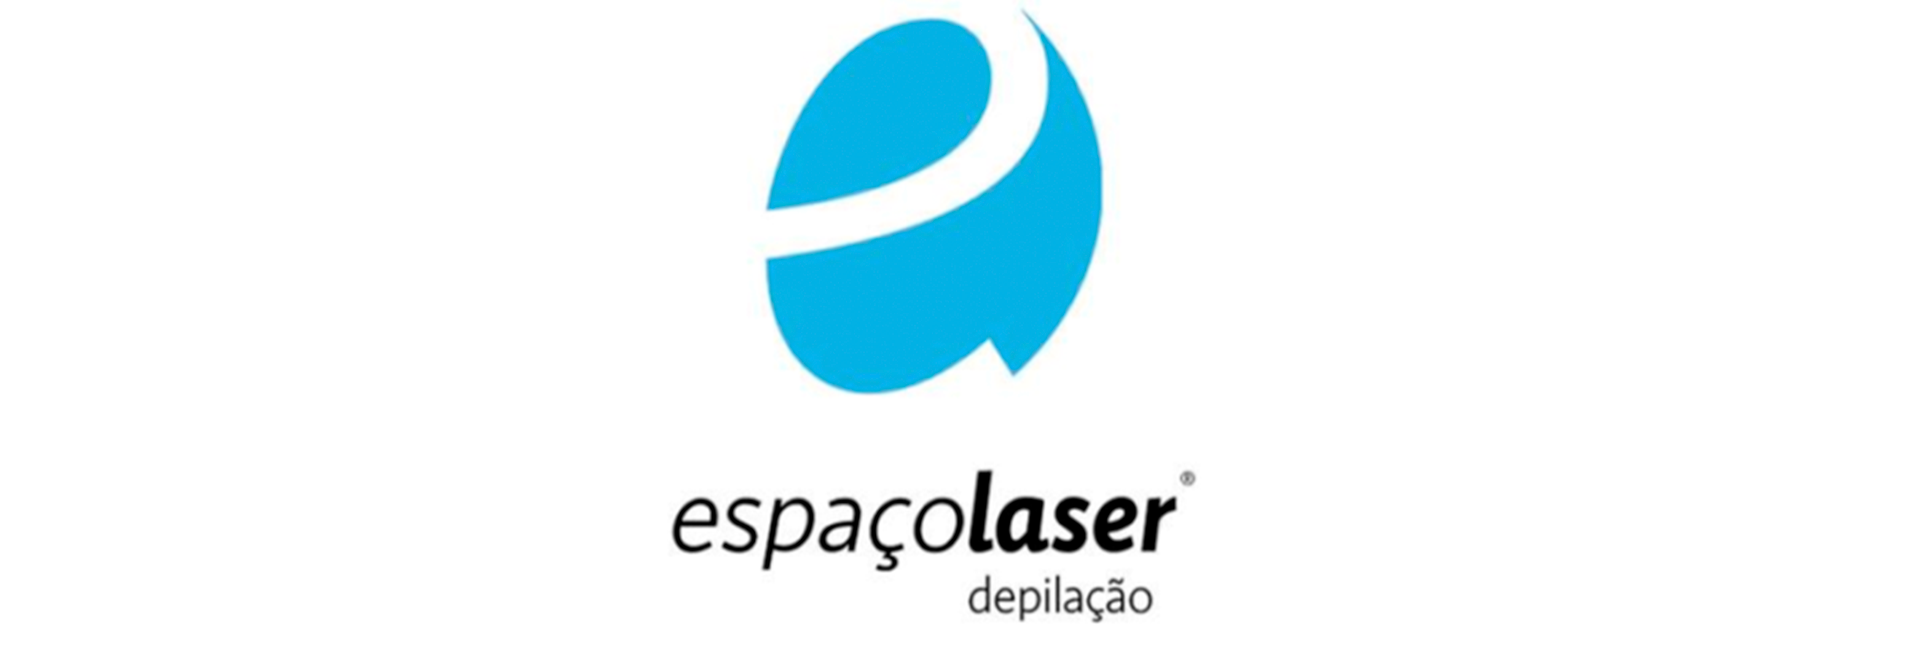 Lojas-Espaco-laser